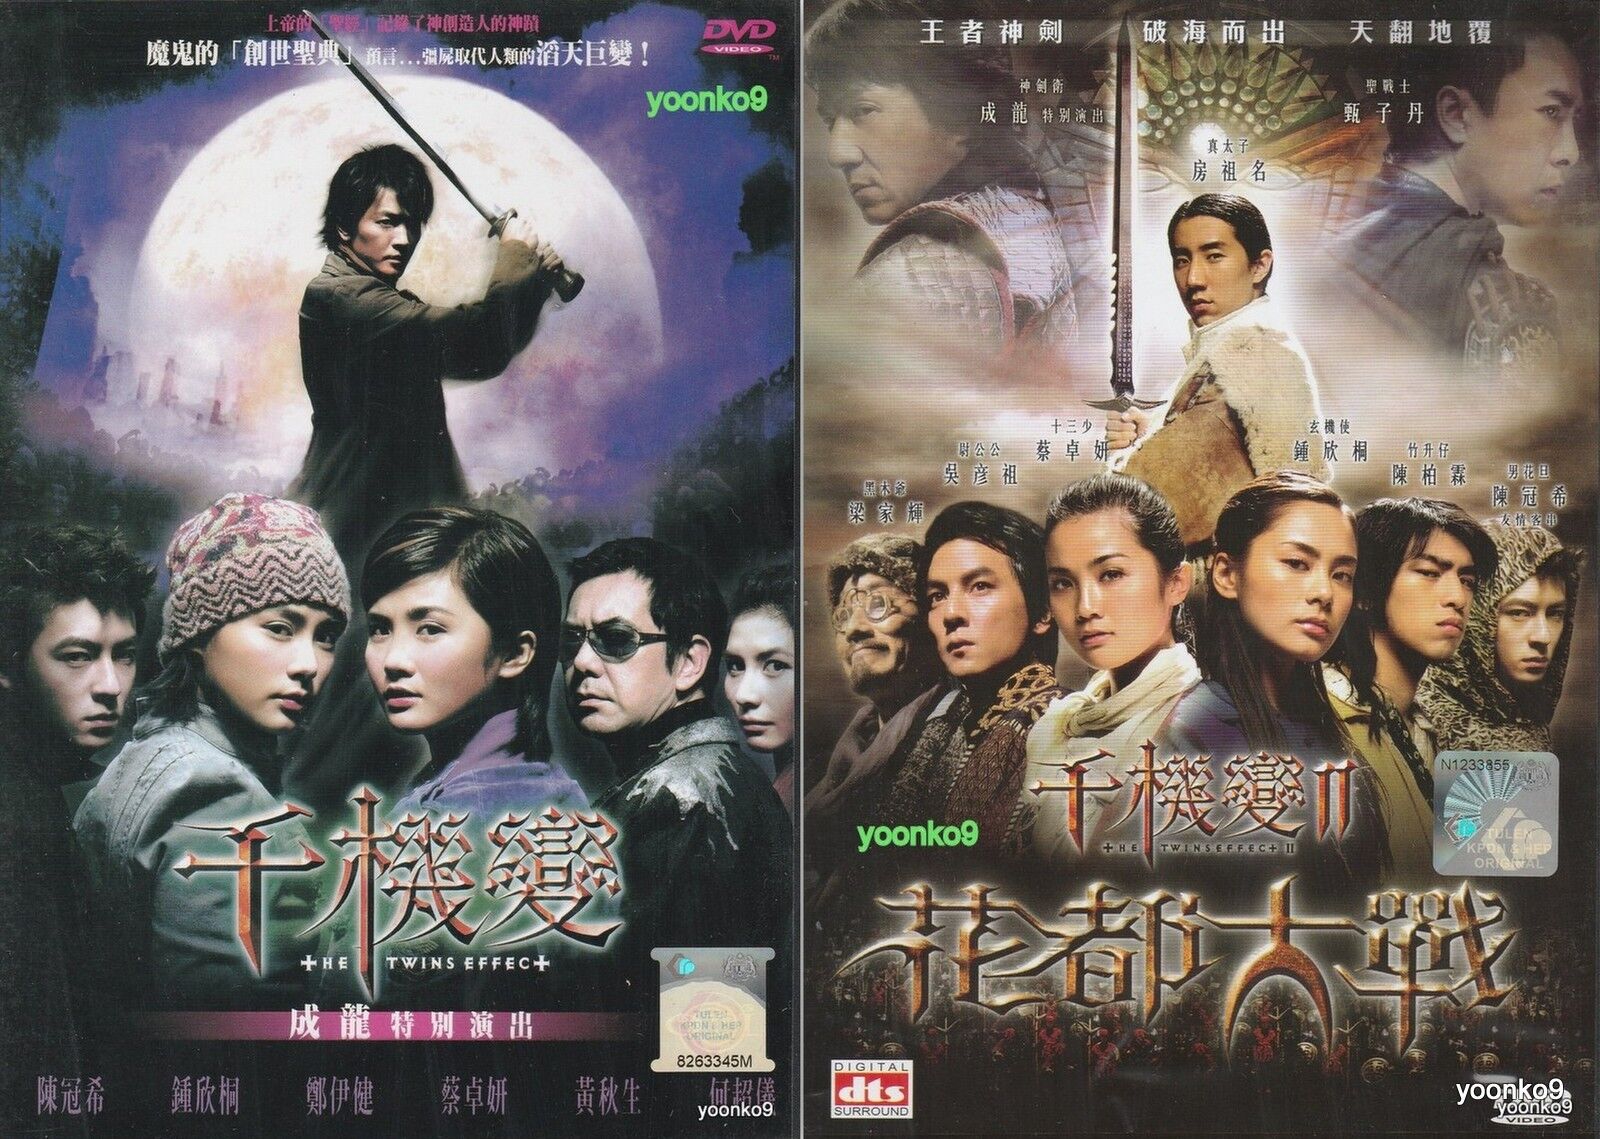 The Twins Effect (1 2 ) DVD Movie English Sub Region 0 Ekin Cheng Donnie  Yen for sale online | eBay